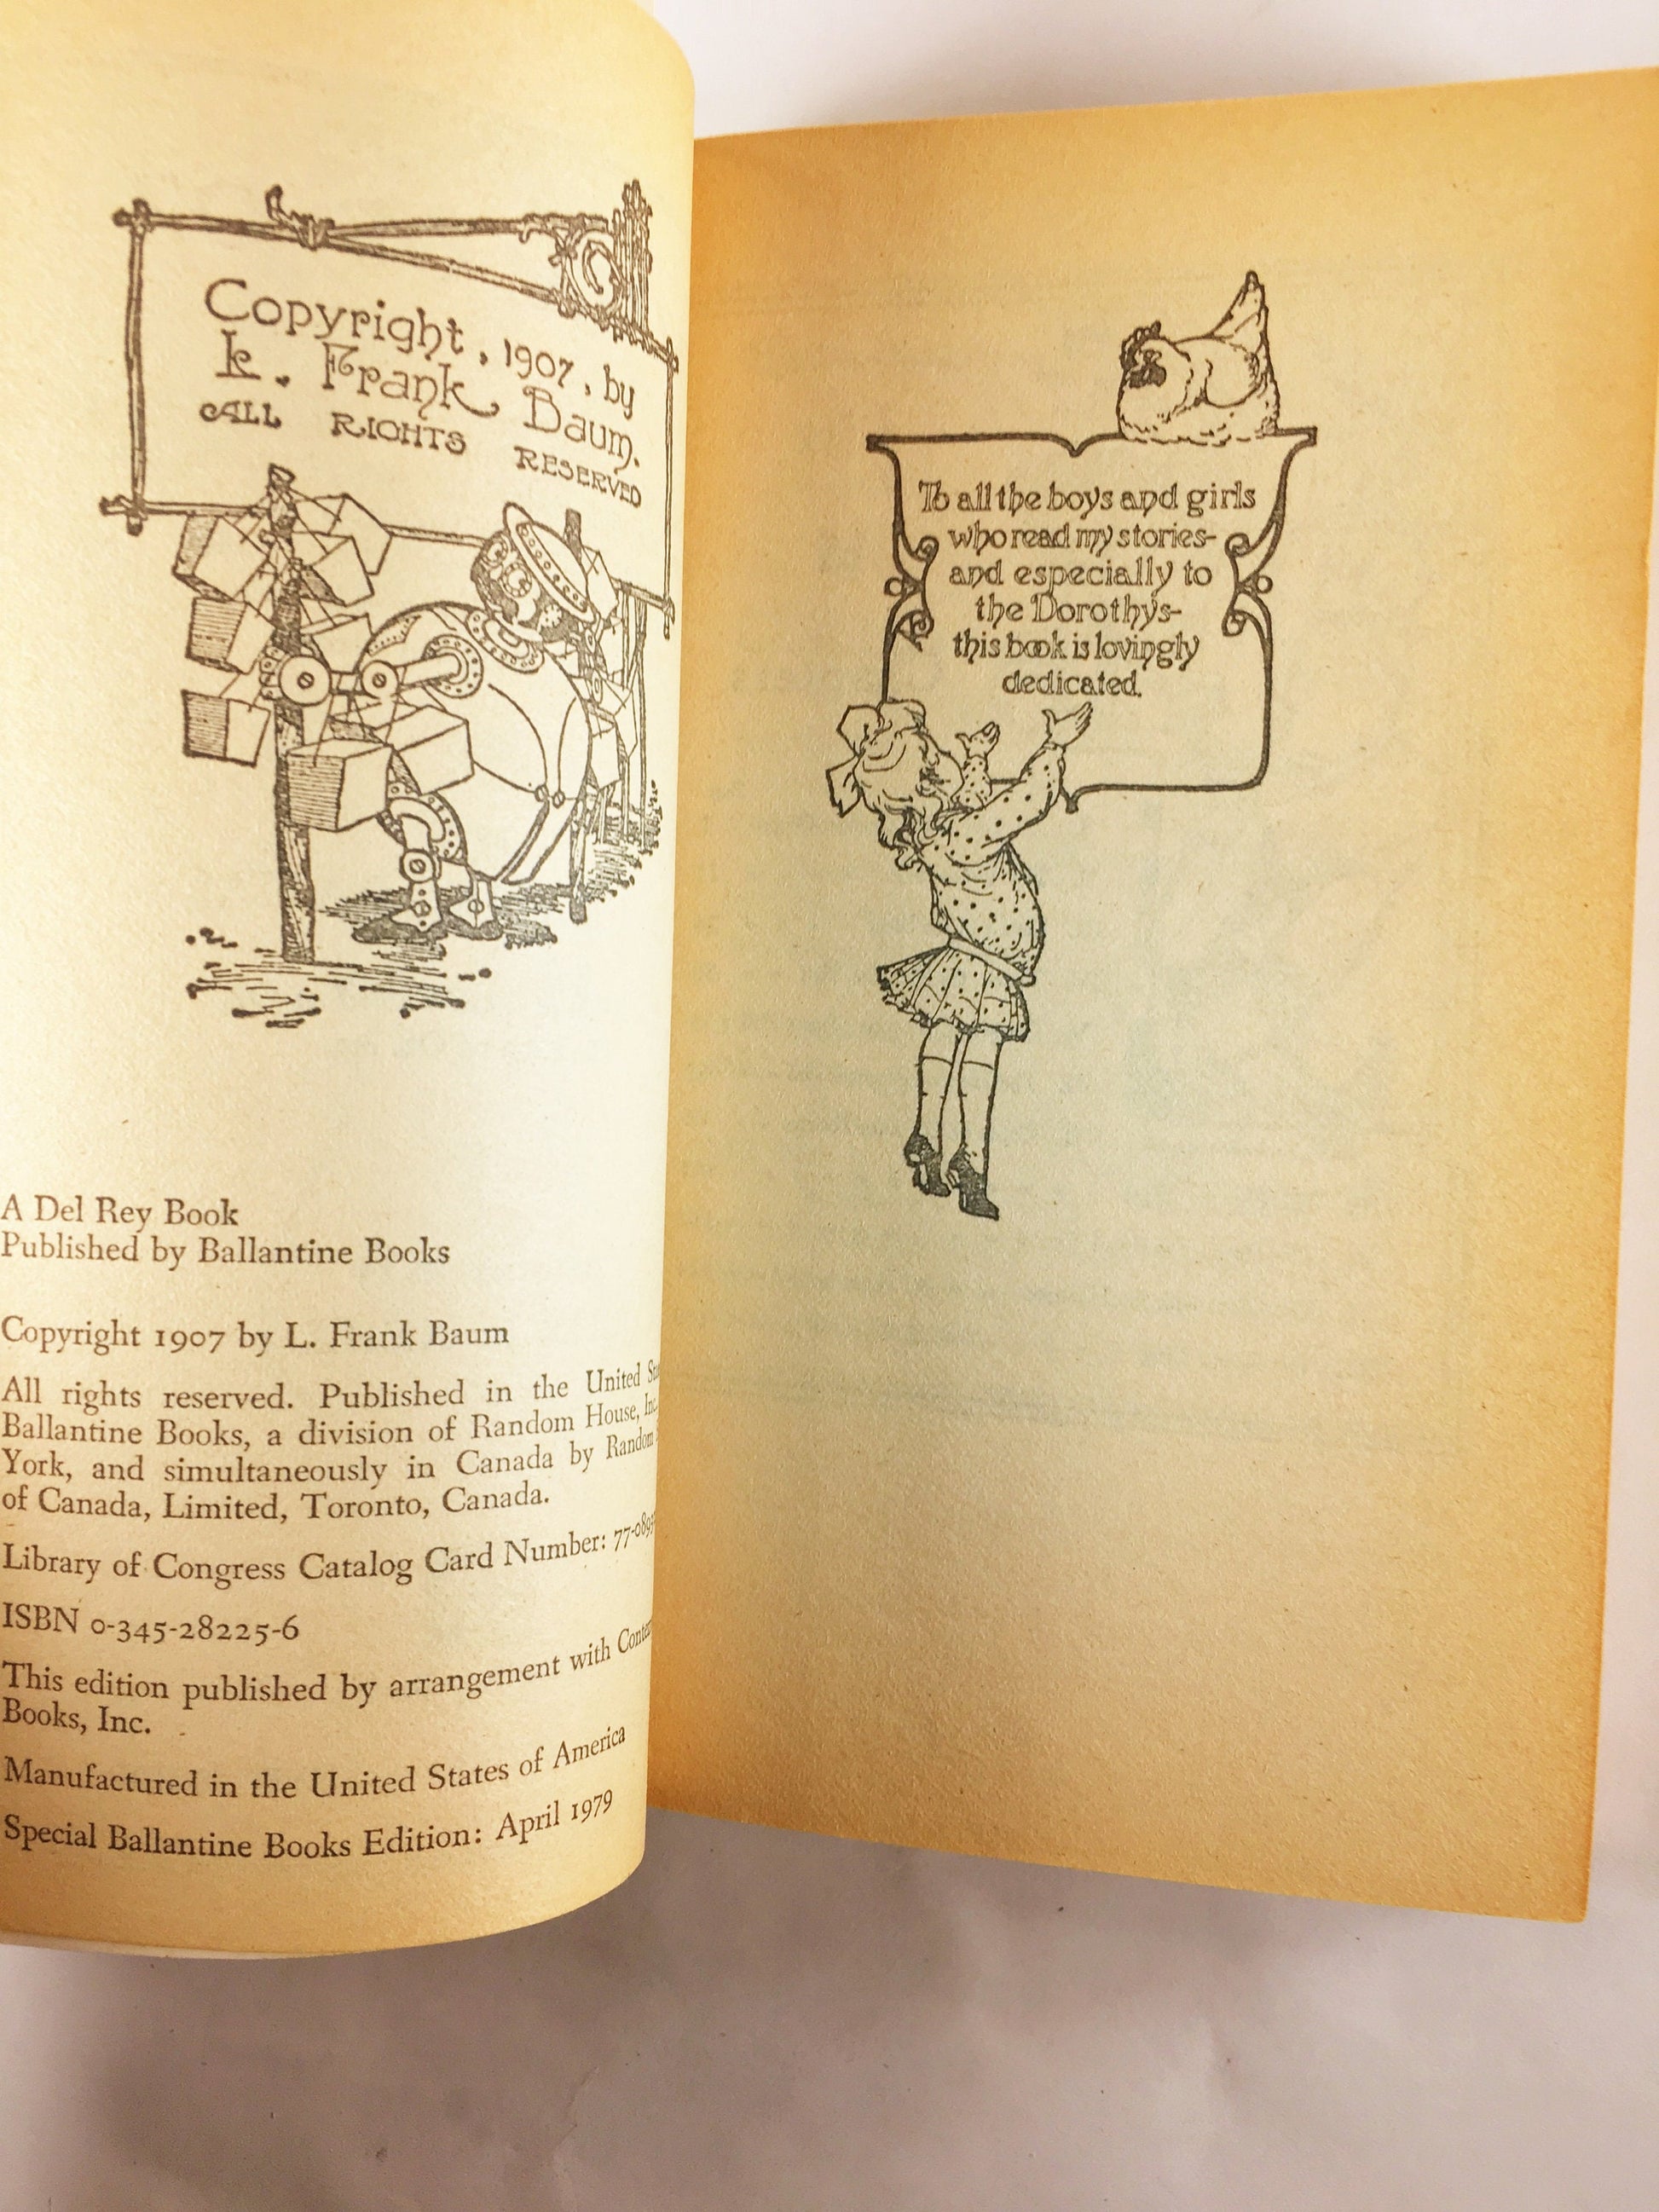 1979 Wizard of Oz vintage paperback book by L Frank Baum Tik-Tok Ozma and Wizard of Oz circa 1979. Teen tween home school reading